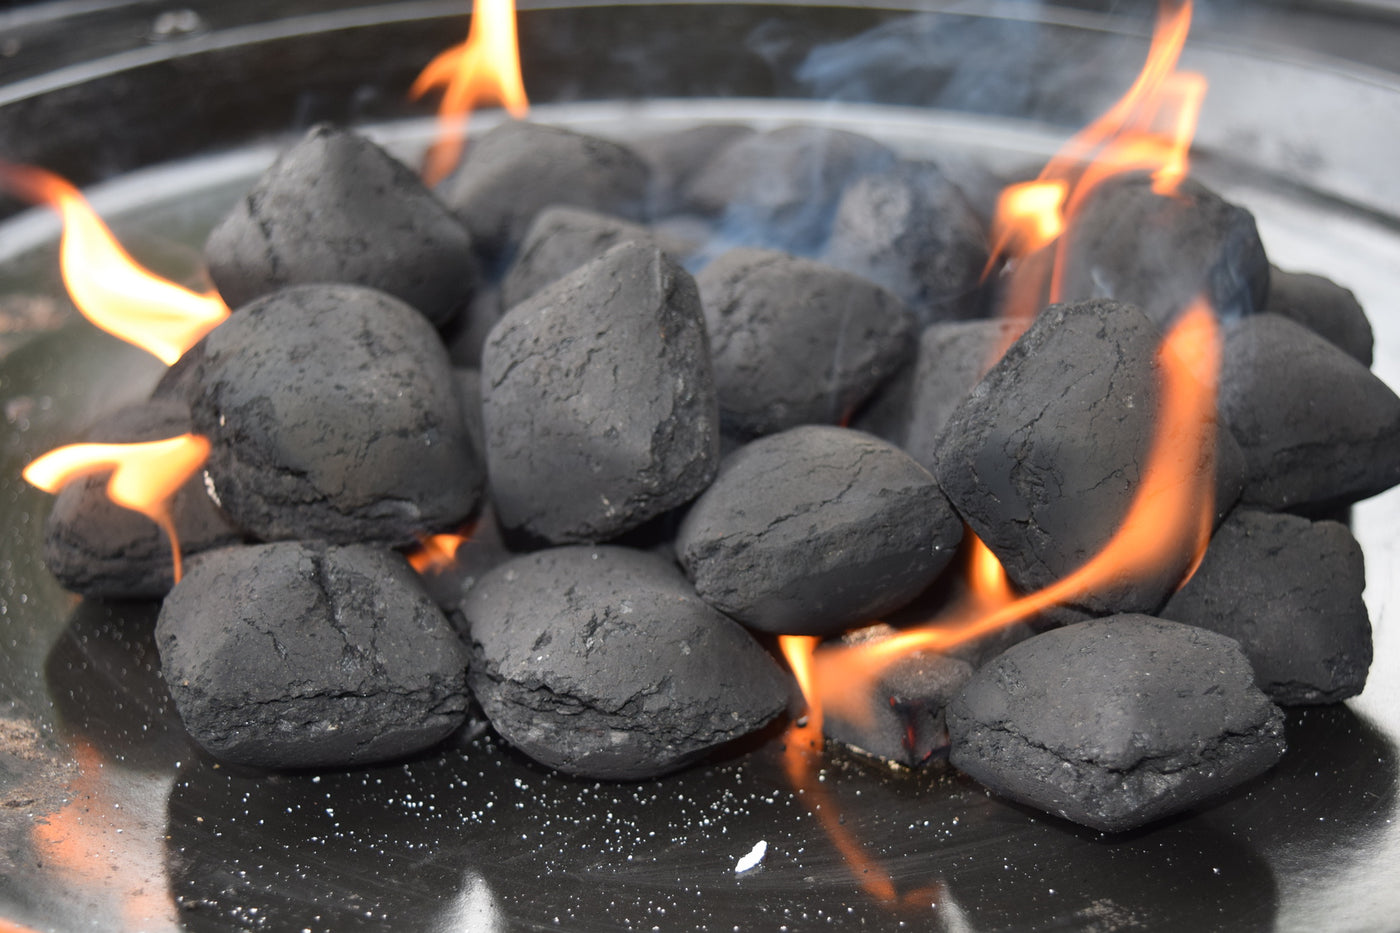 1 Saco Carbón Briquetas Quebracho 20 kilos + Despacho Gratis en Santiago* - Carbón Quebracho